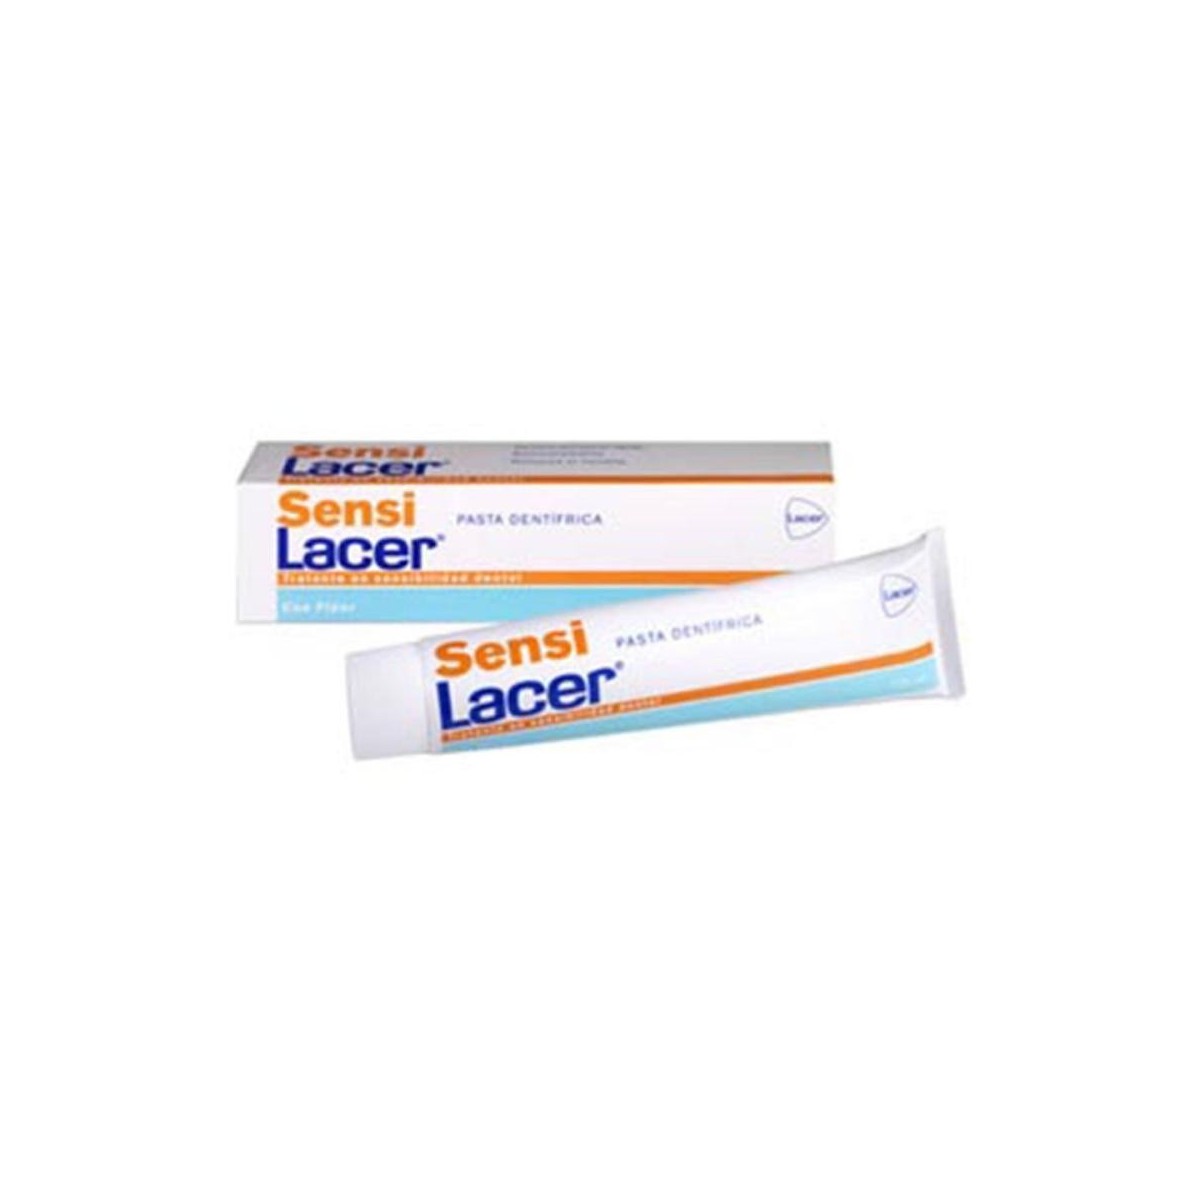 sensilacer-pasta-125-ml-lacer